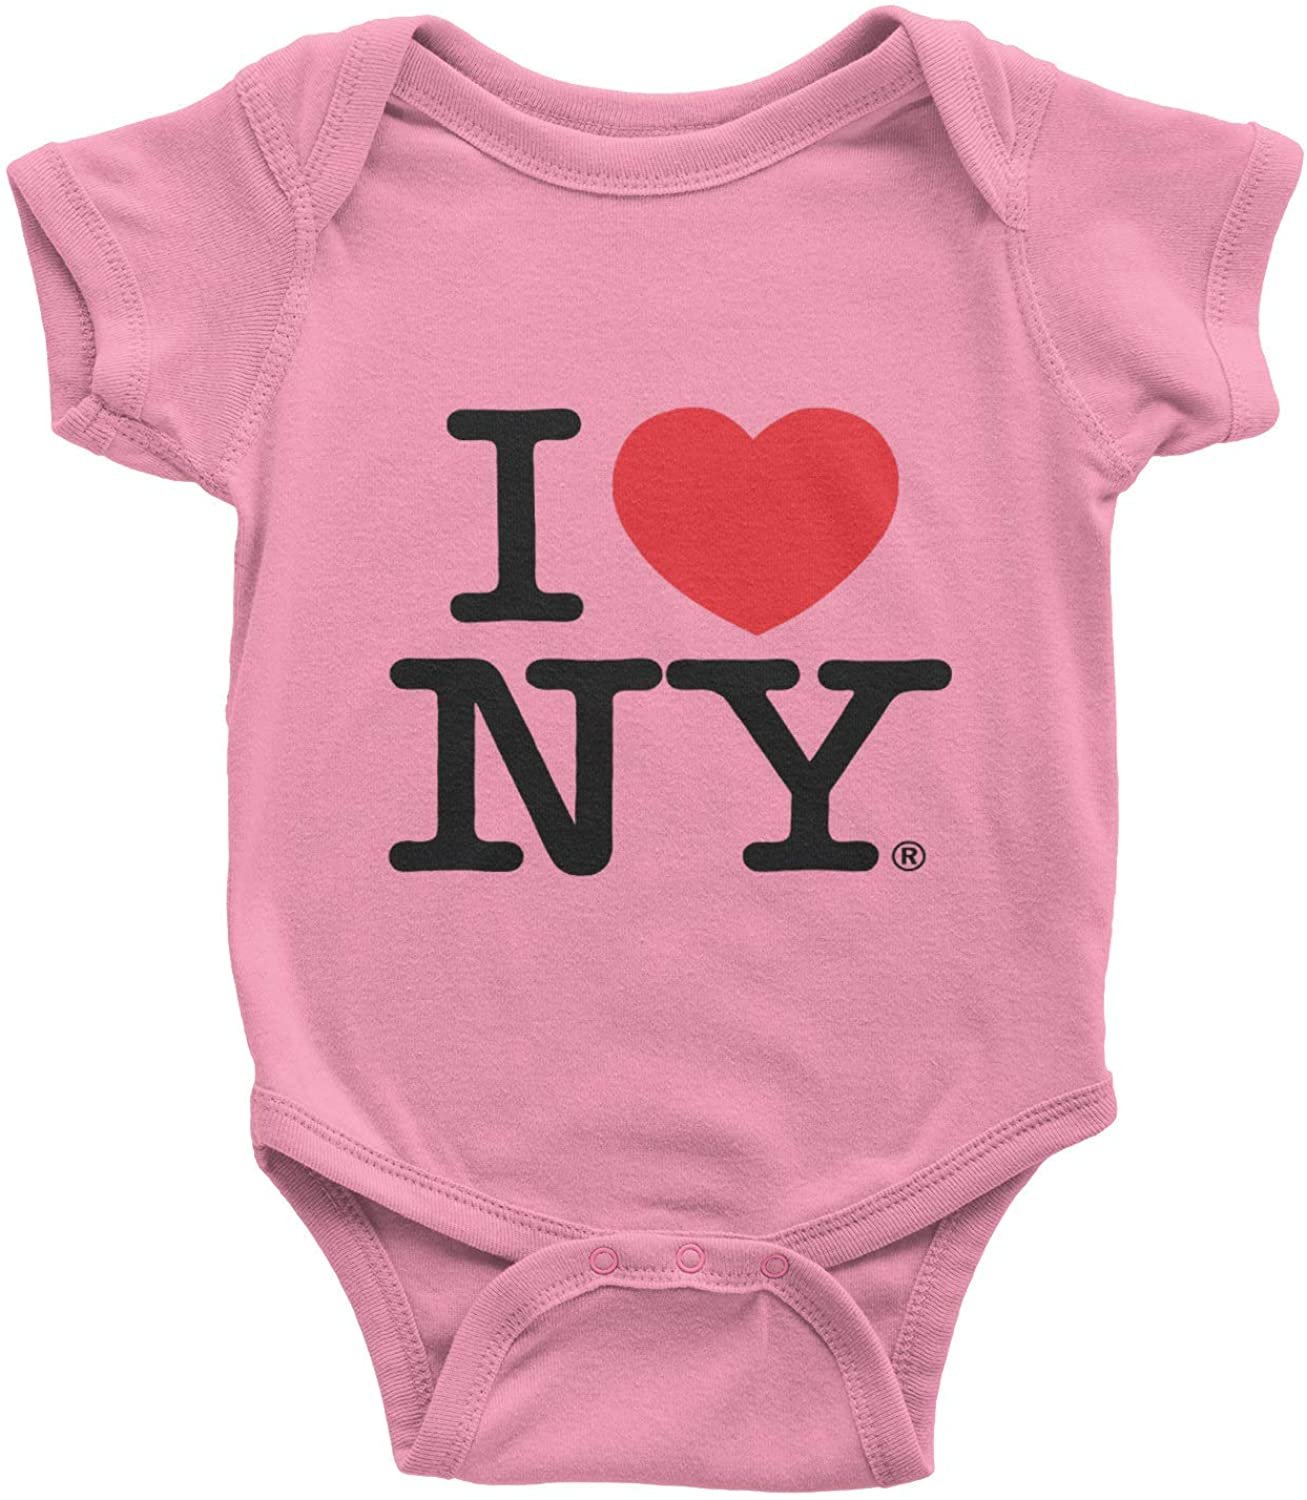 I Love NY Baby Bodysuit Light Pink